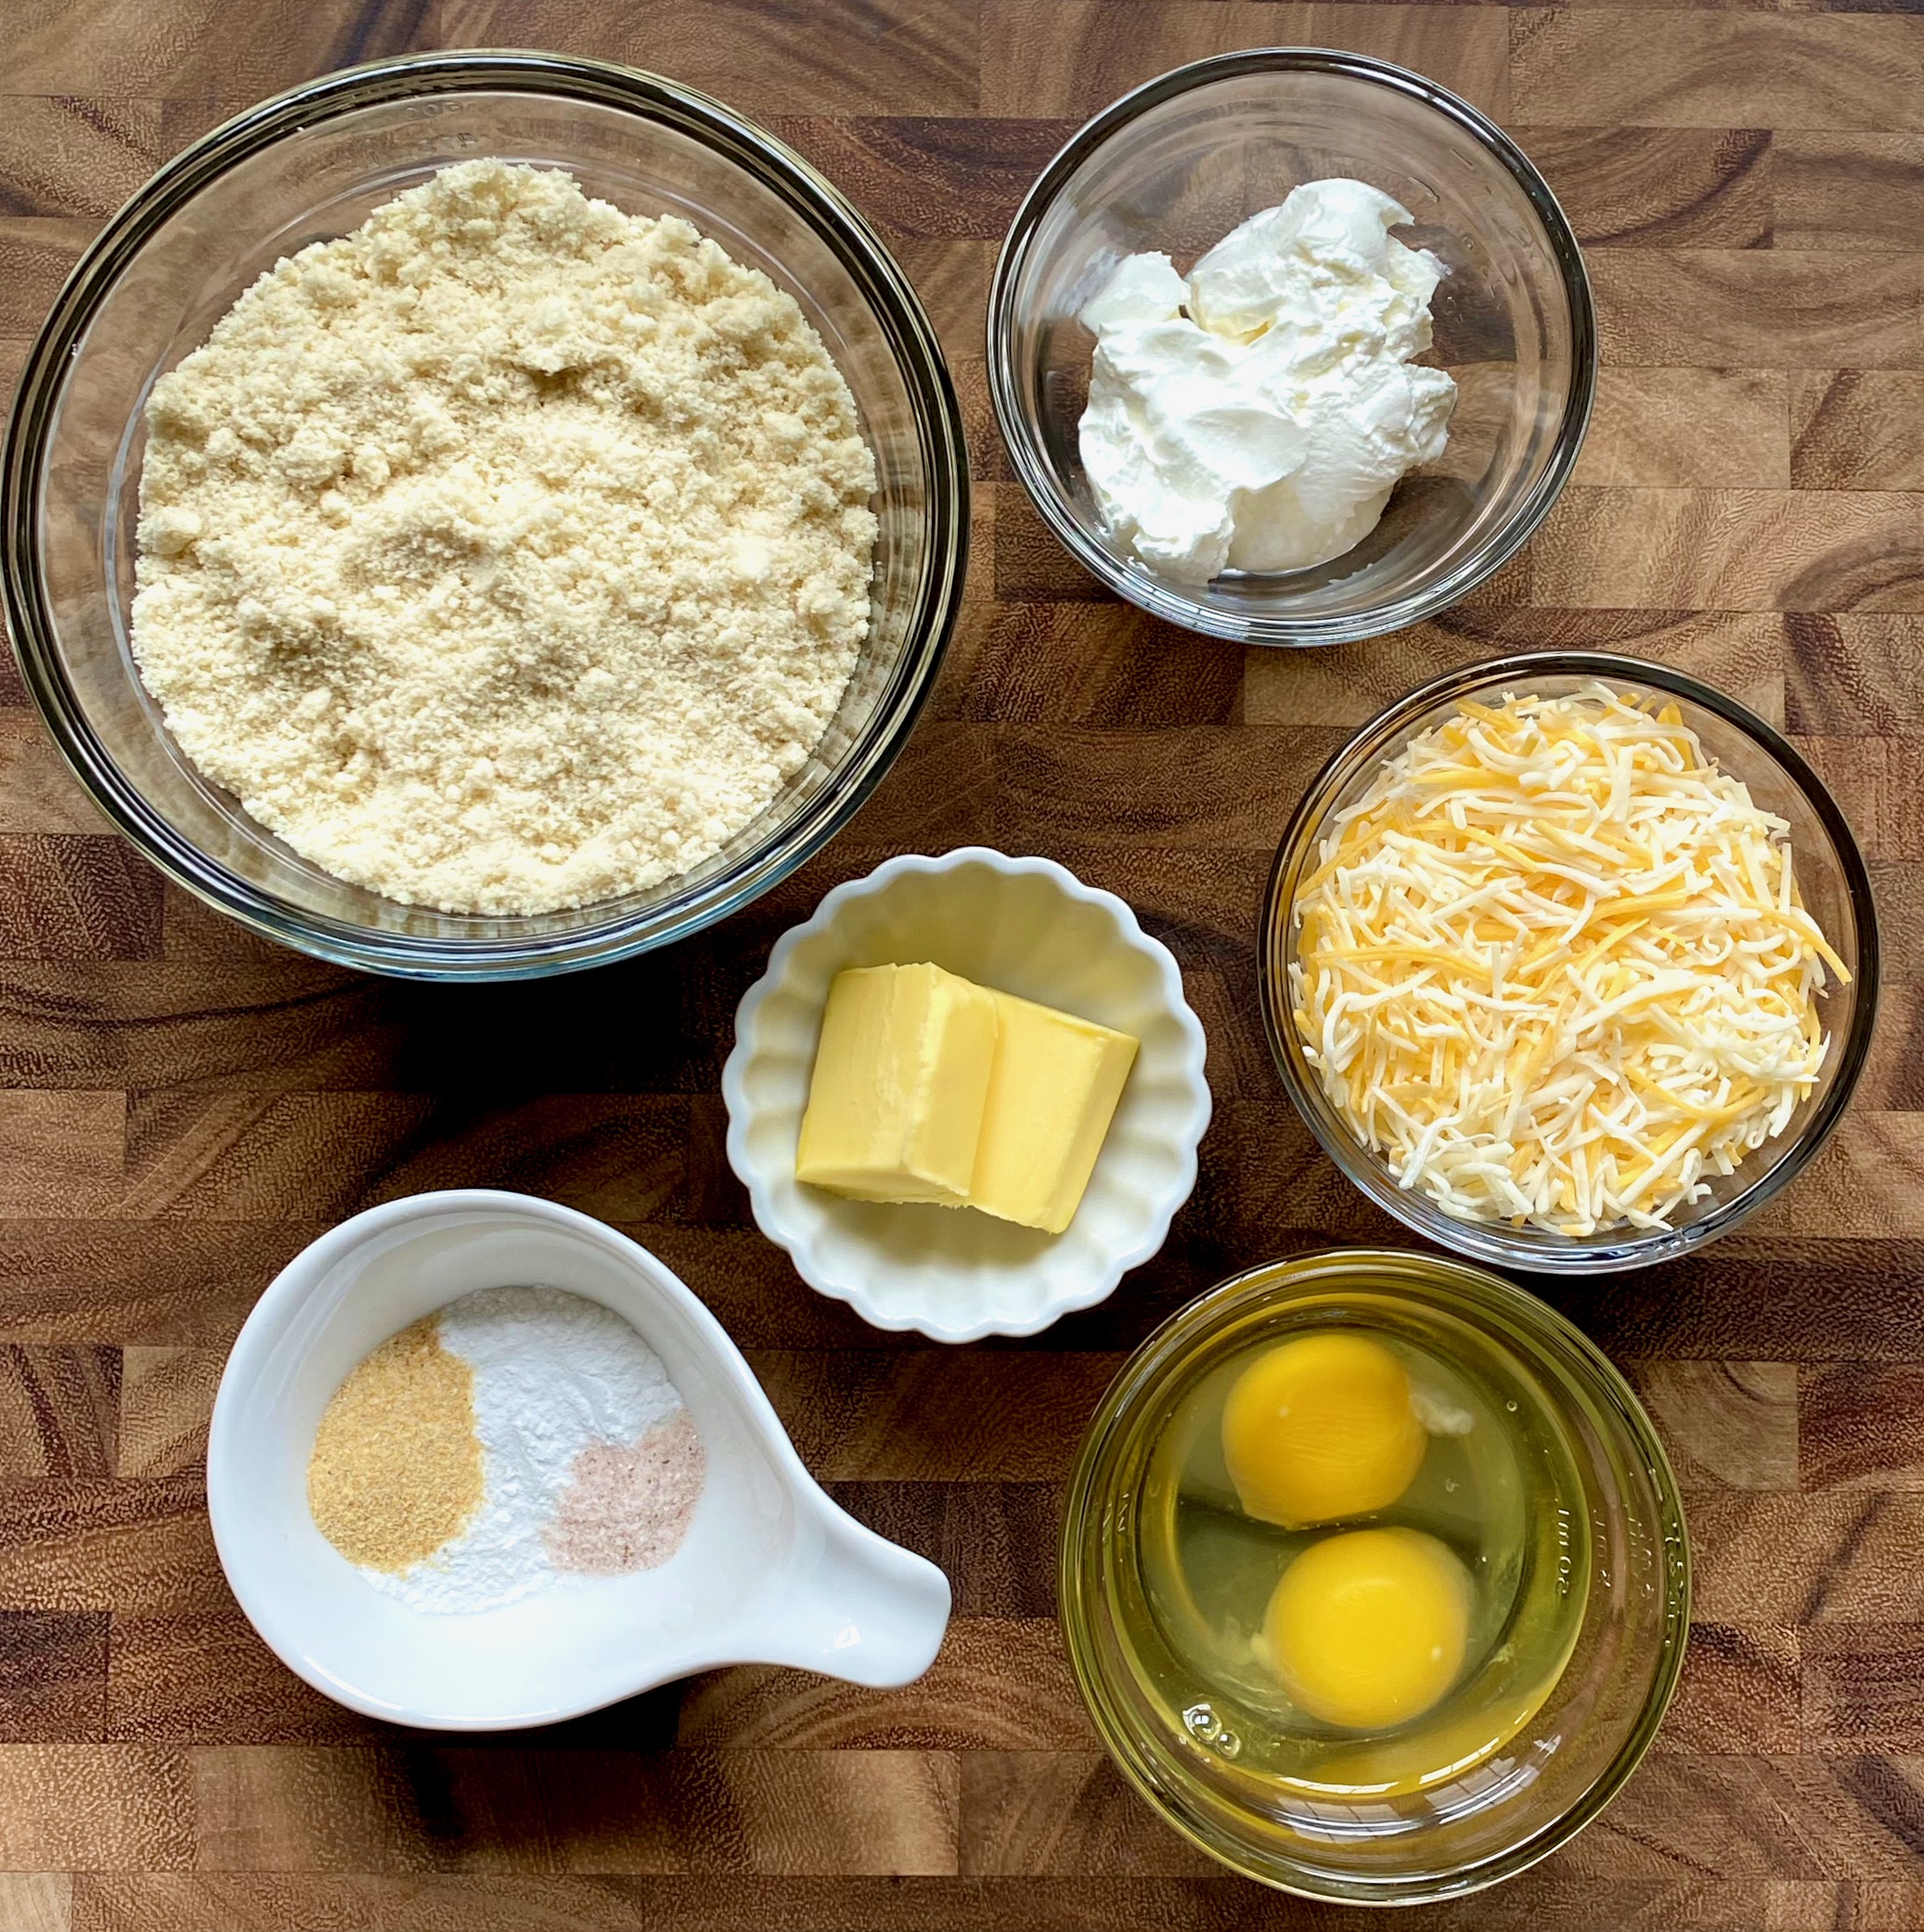 Ingredients for cheese biscuits in bowls Almond flour, baking powder, garlic powder, salt, butter, eggs and sour cream.